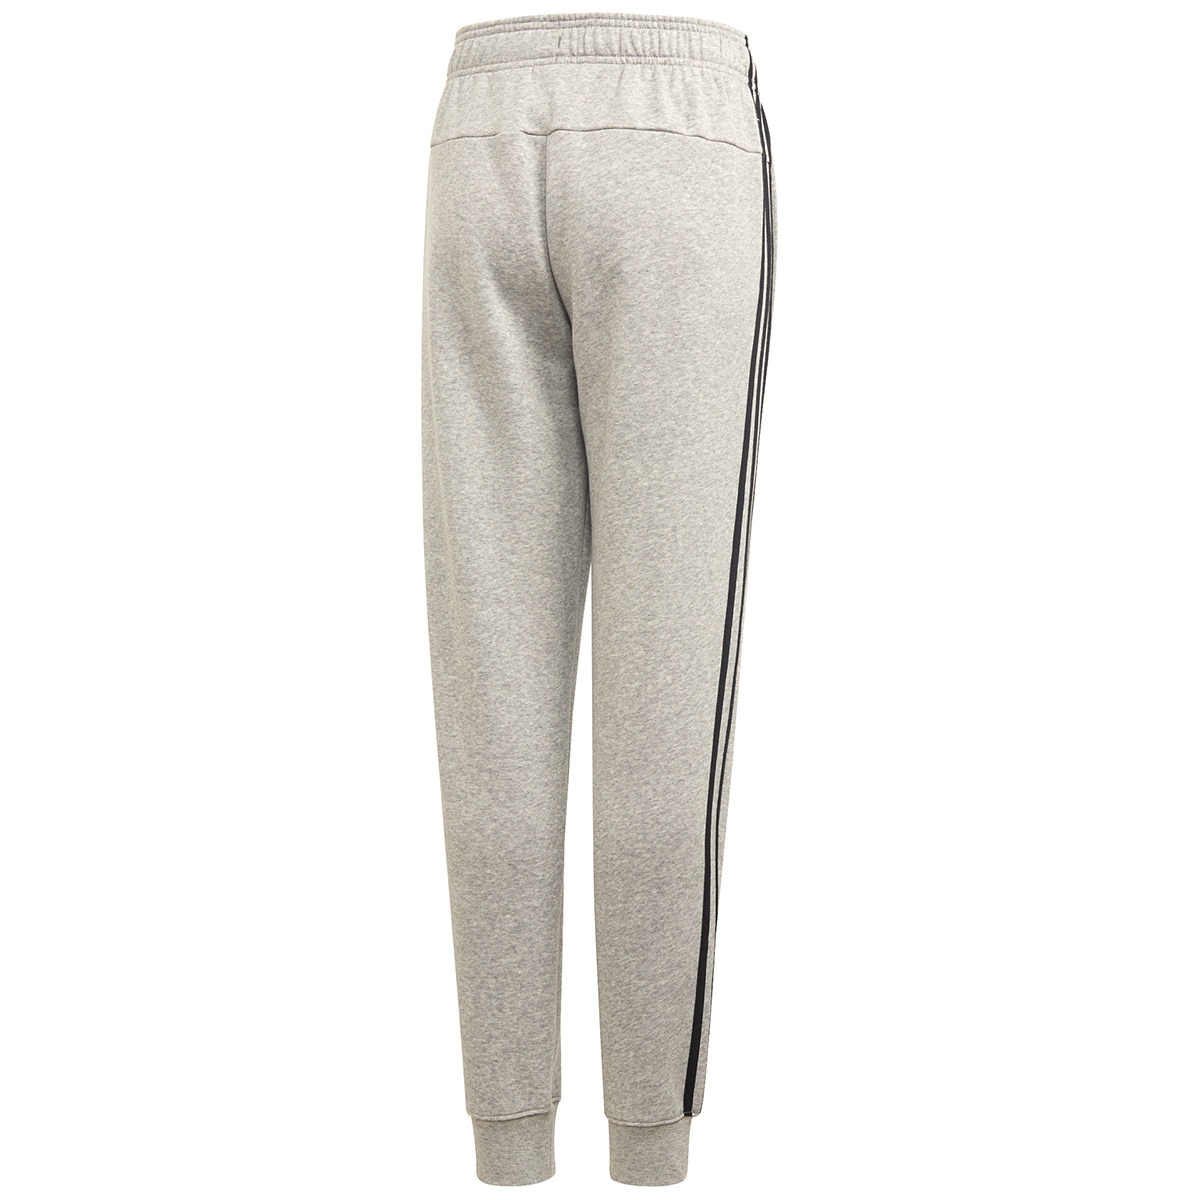 Adidas Boy's Pants - Grey